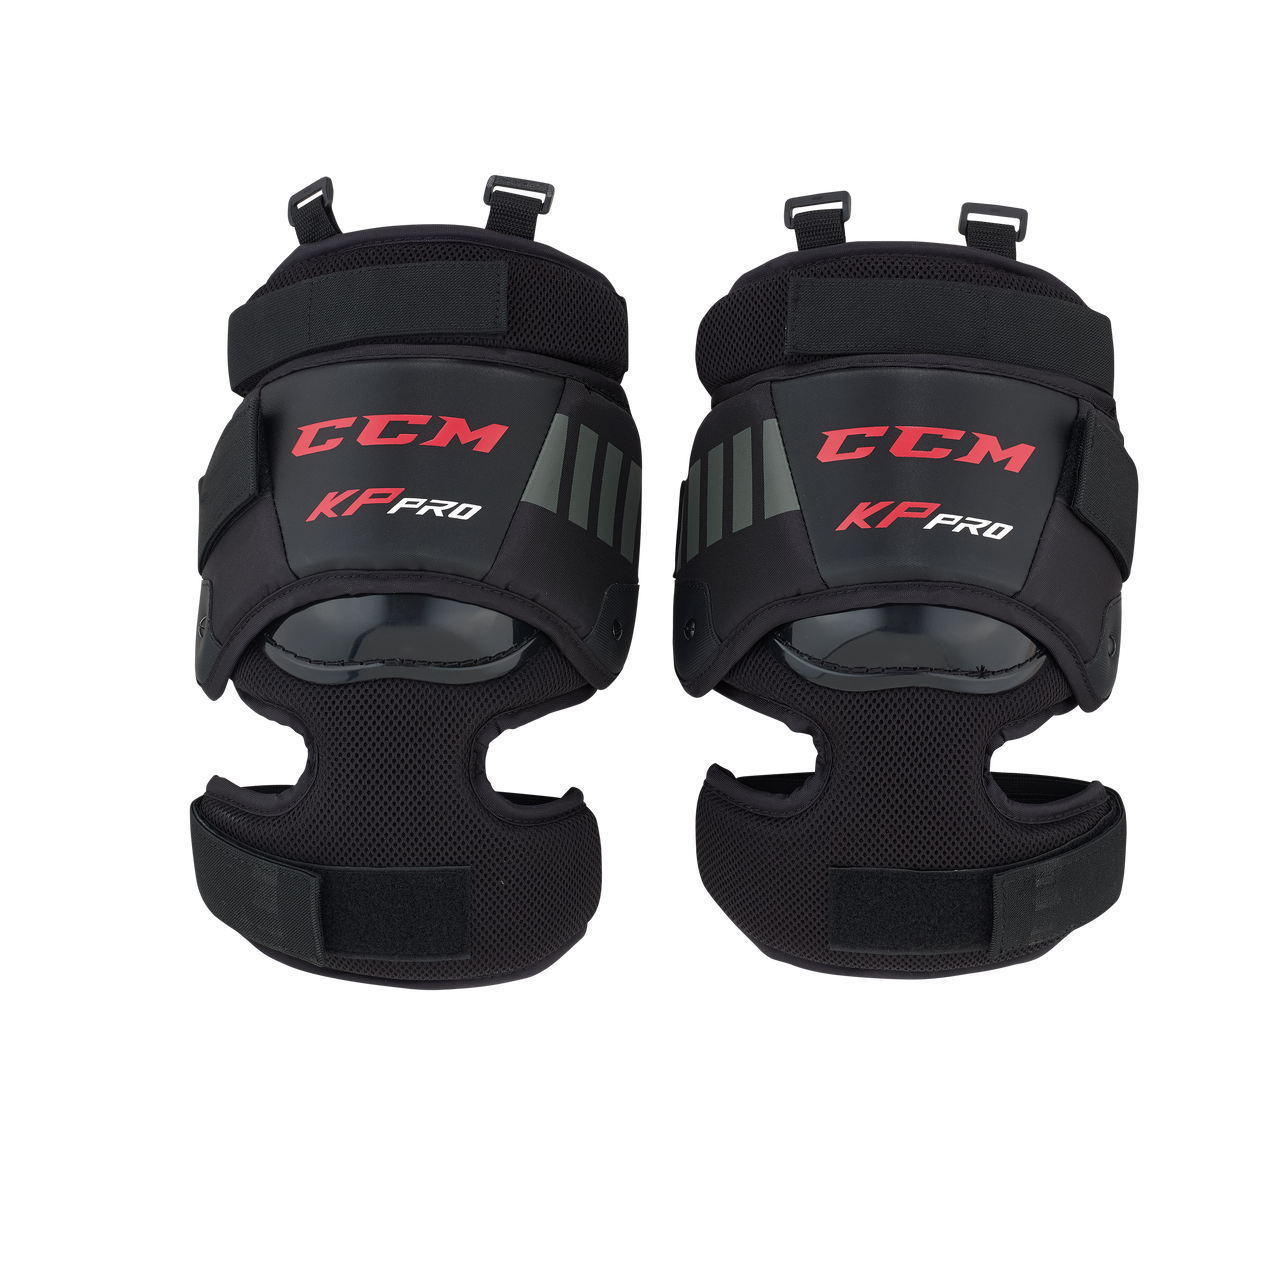 CCM Axis 2 Goalie Equipment - Total Custom - Symmetrical Custom Design -  Senior